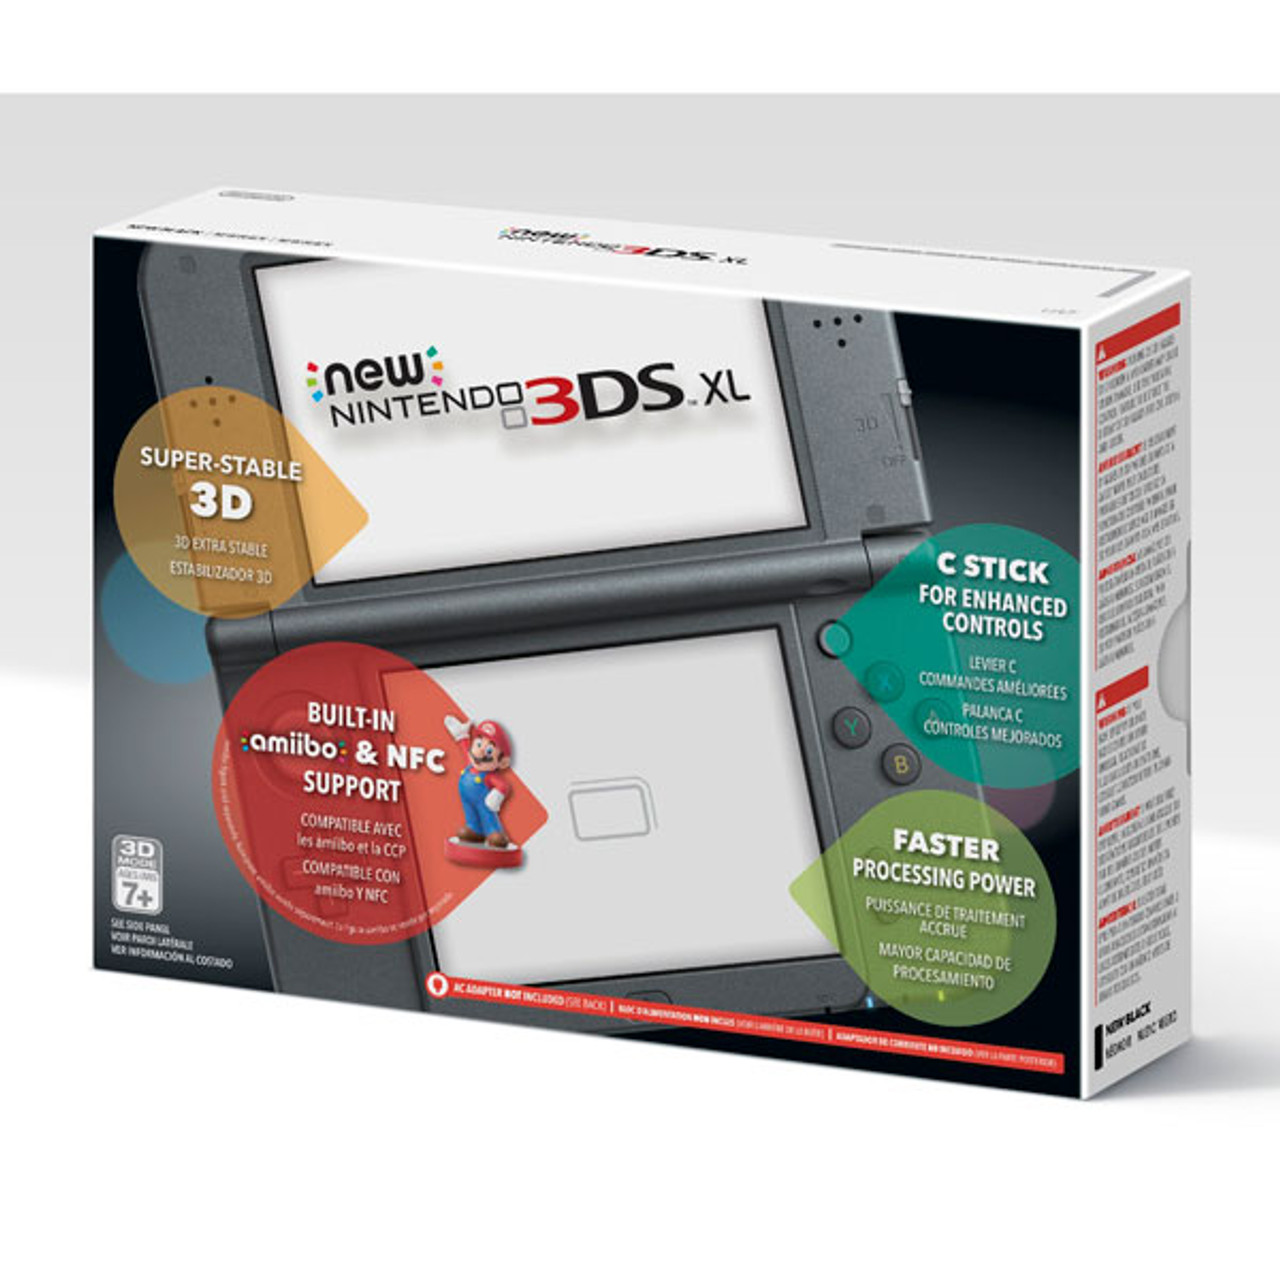 NINTENDO 3DS PACK #01 (0001-0036) 